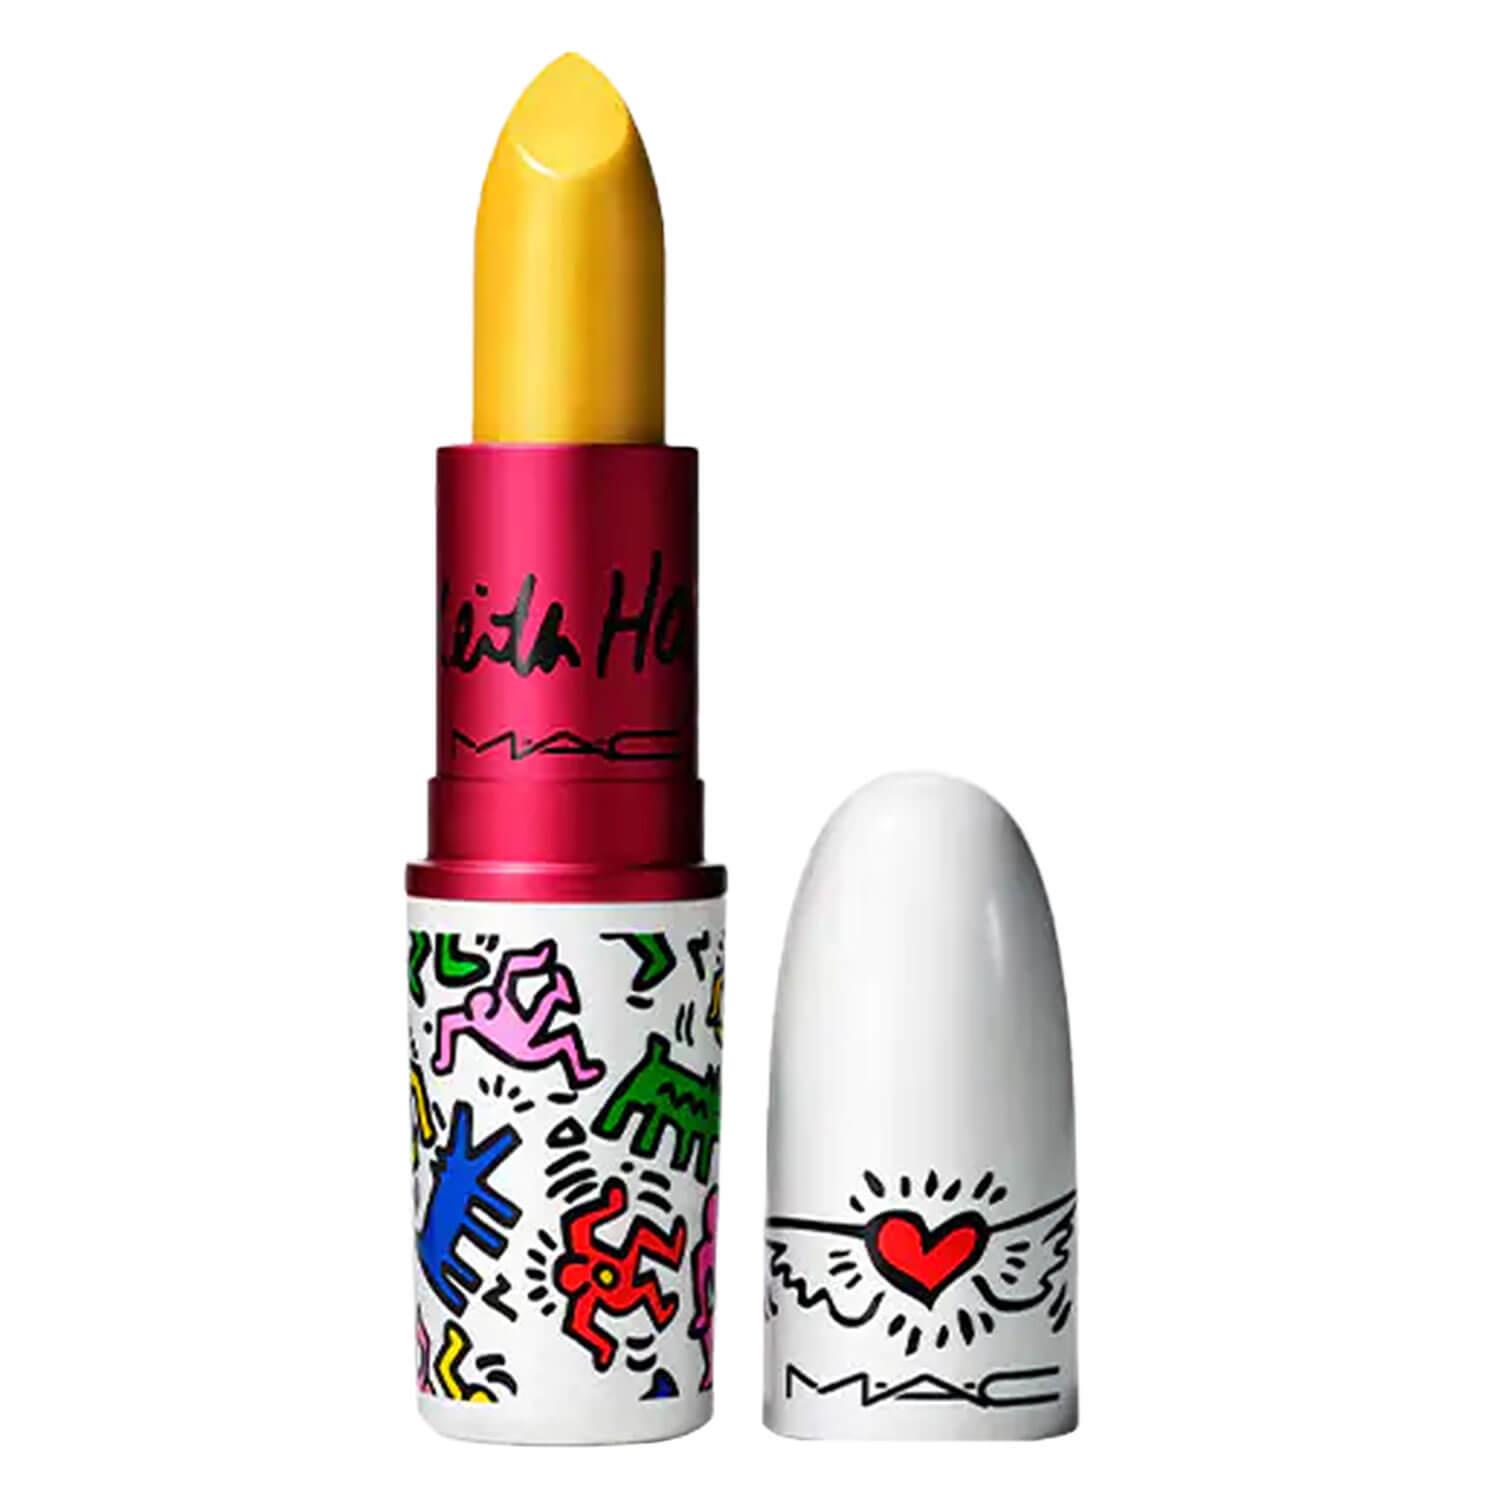 Viva Glam Lipstick - Frost St. Marks Yellow